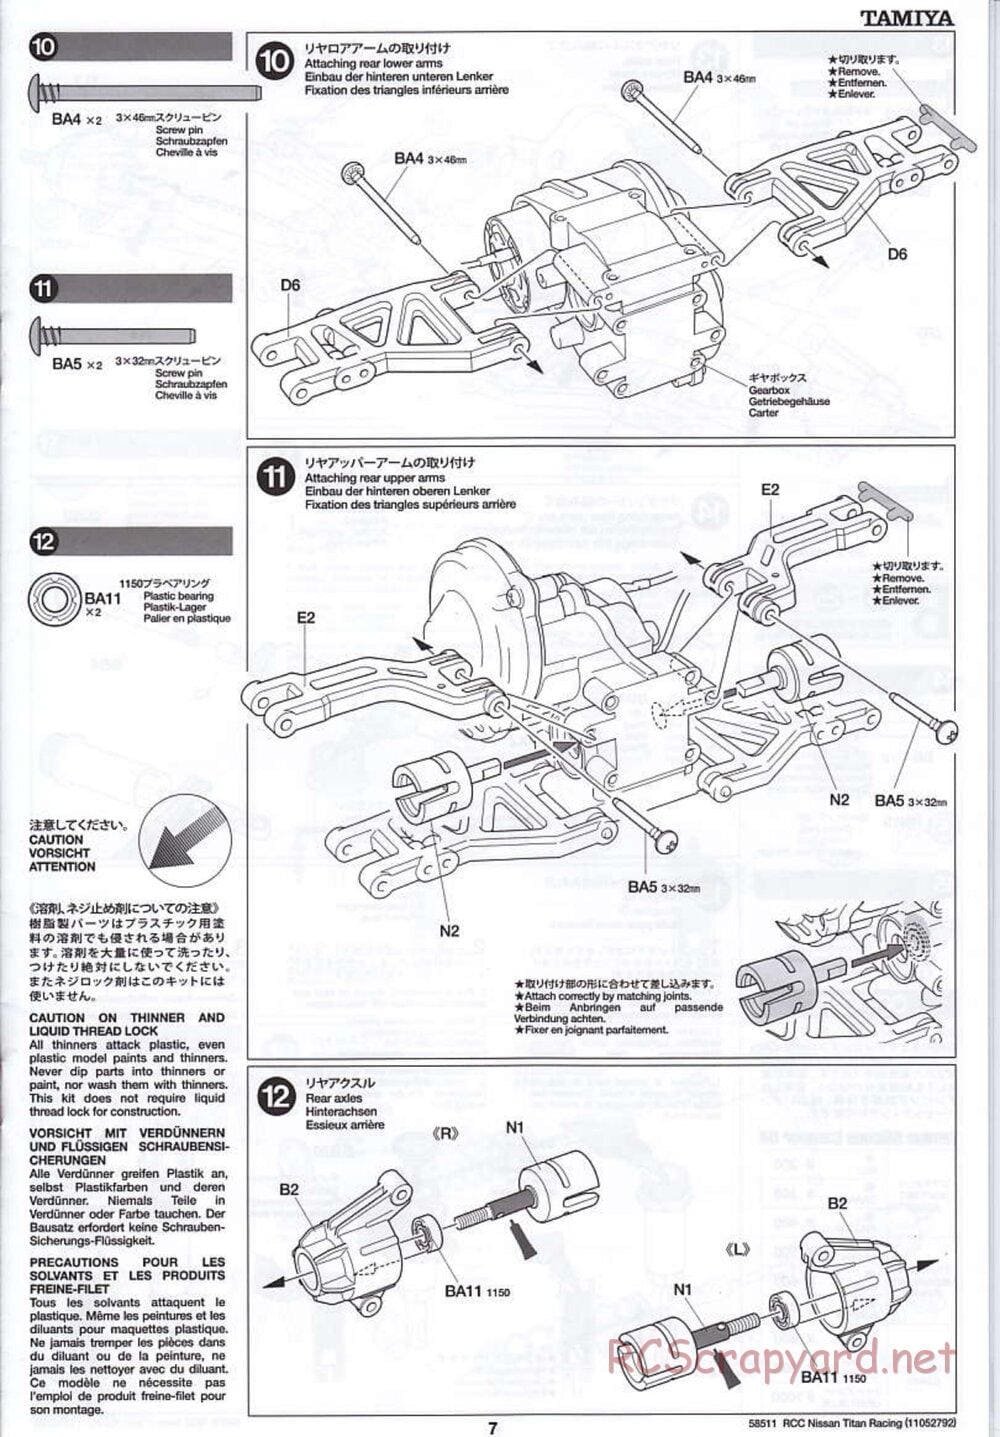 Tamiya - Nissan Titan Chassis - Manual - Page 7